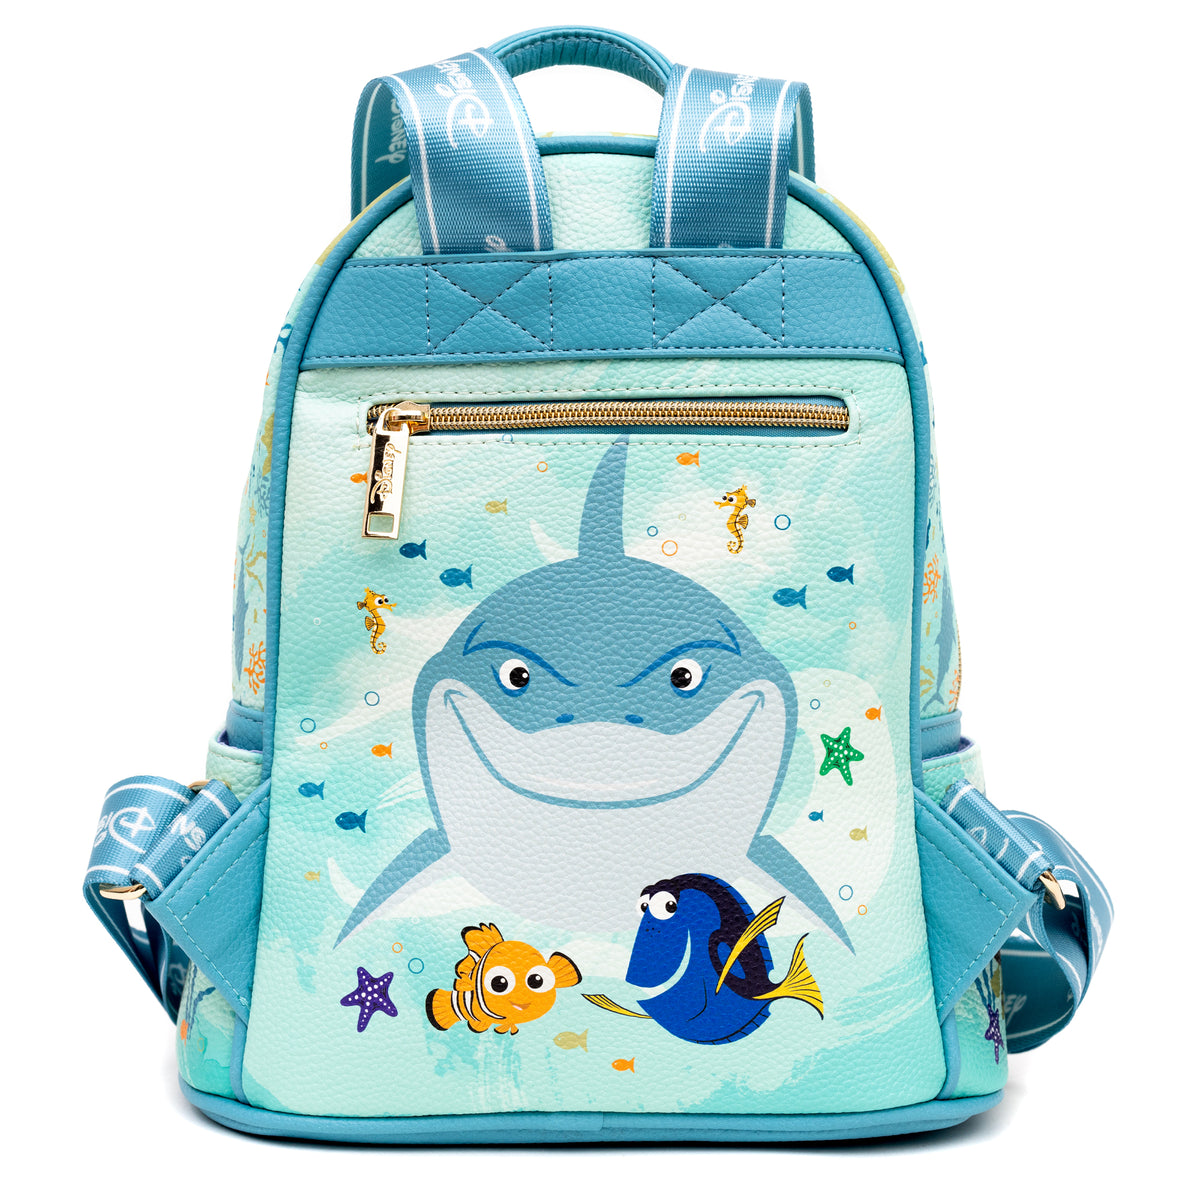 Disney Pixar Finding Nemo Mini Backpack